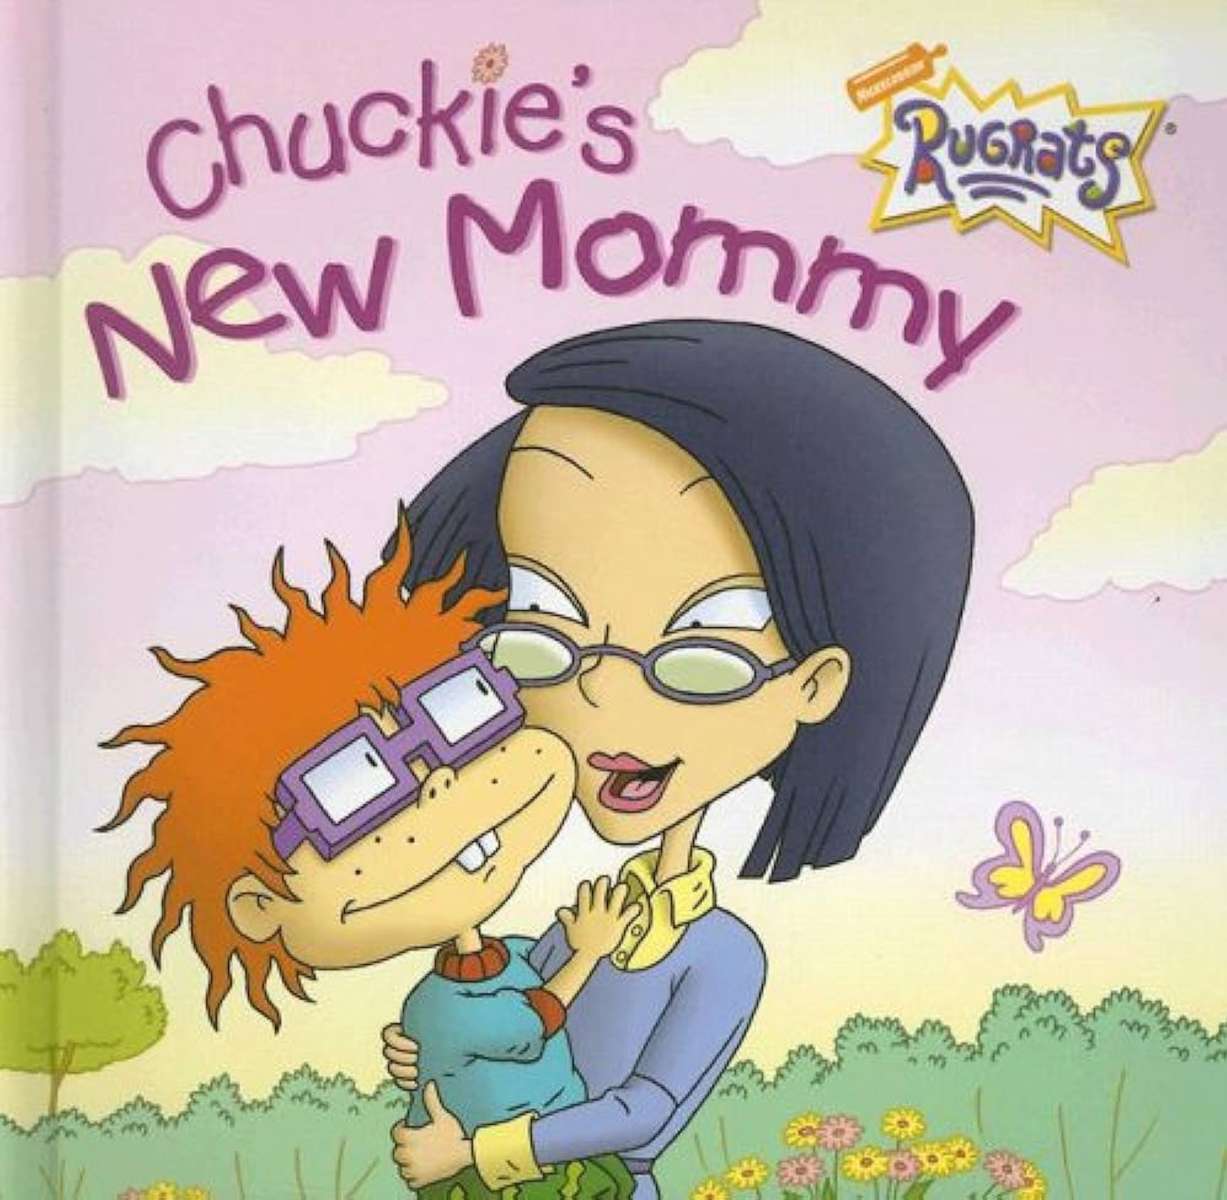 Chuckies neue Mama (Rugrats) Puzzlespiel online